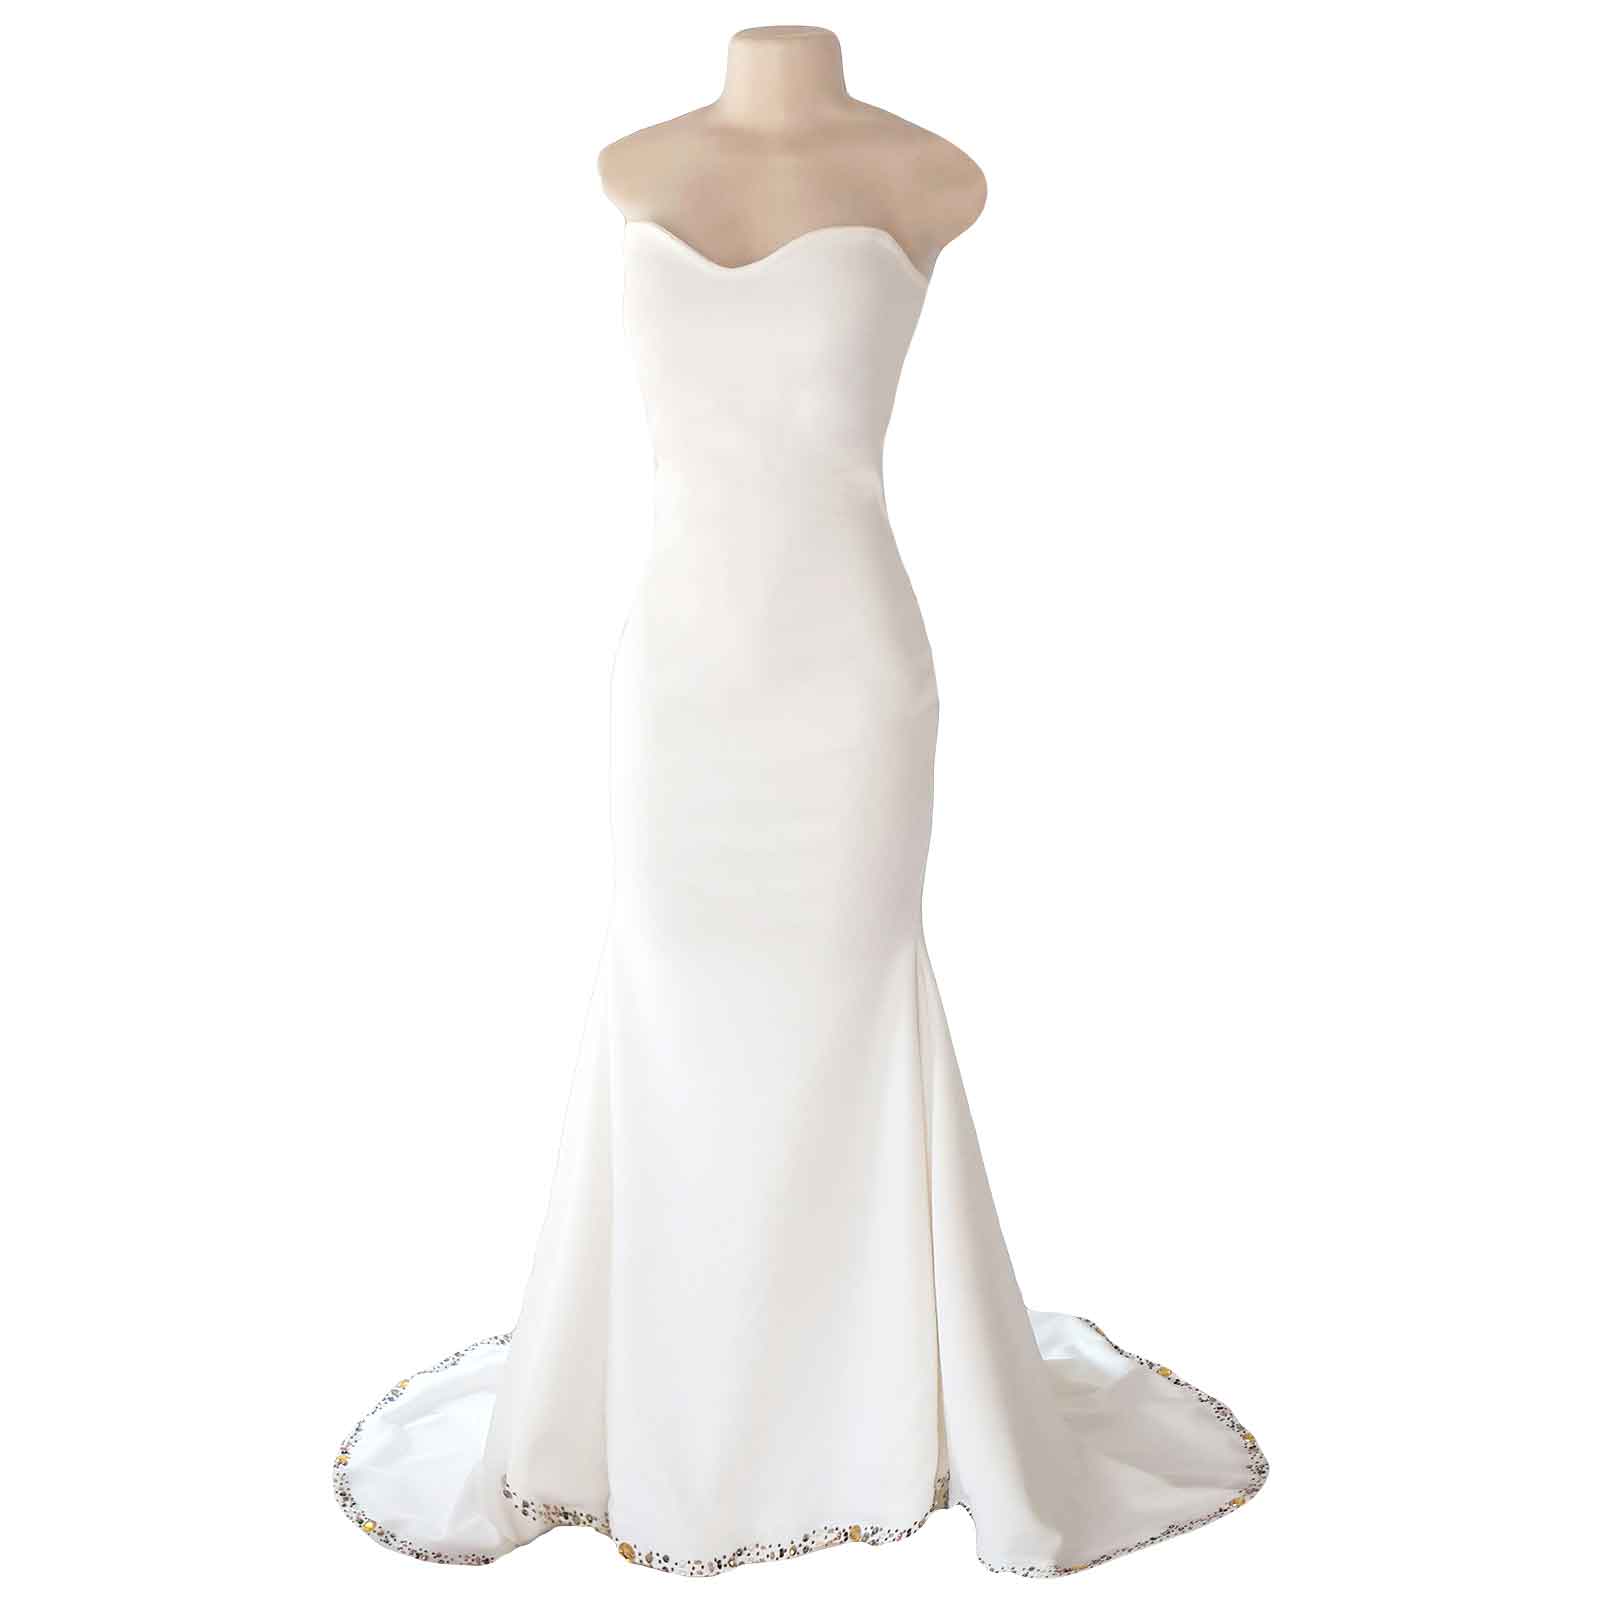 Ivory boobtube sweetheart soft mermaid wedding dress 1 ivory boob tube sweetheart soft mermaid wedding dress